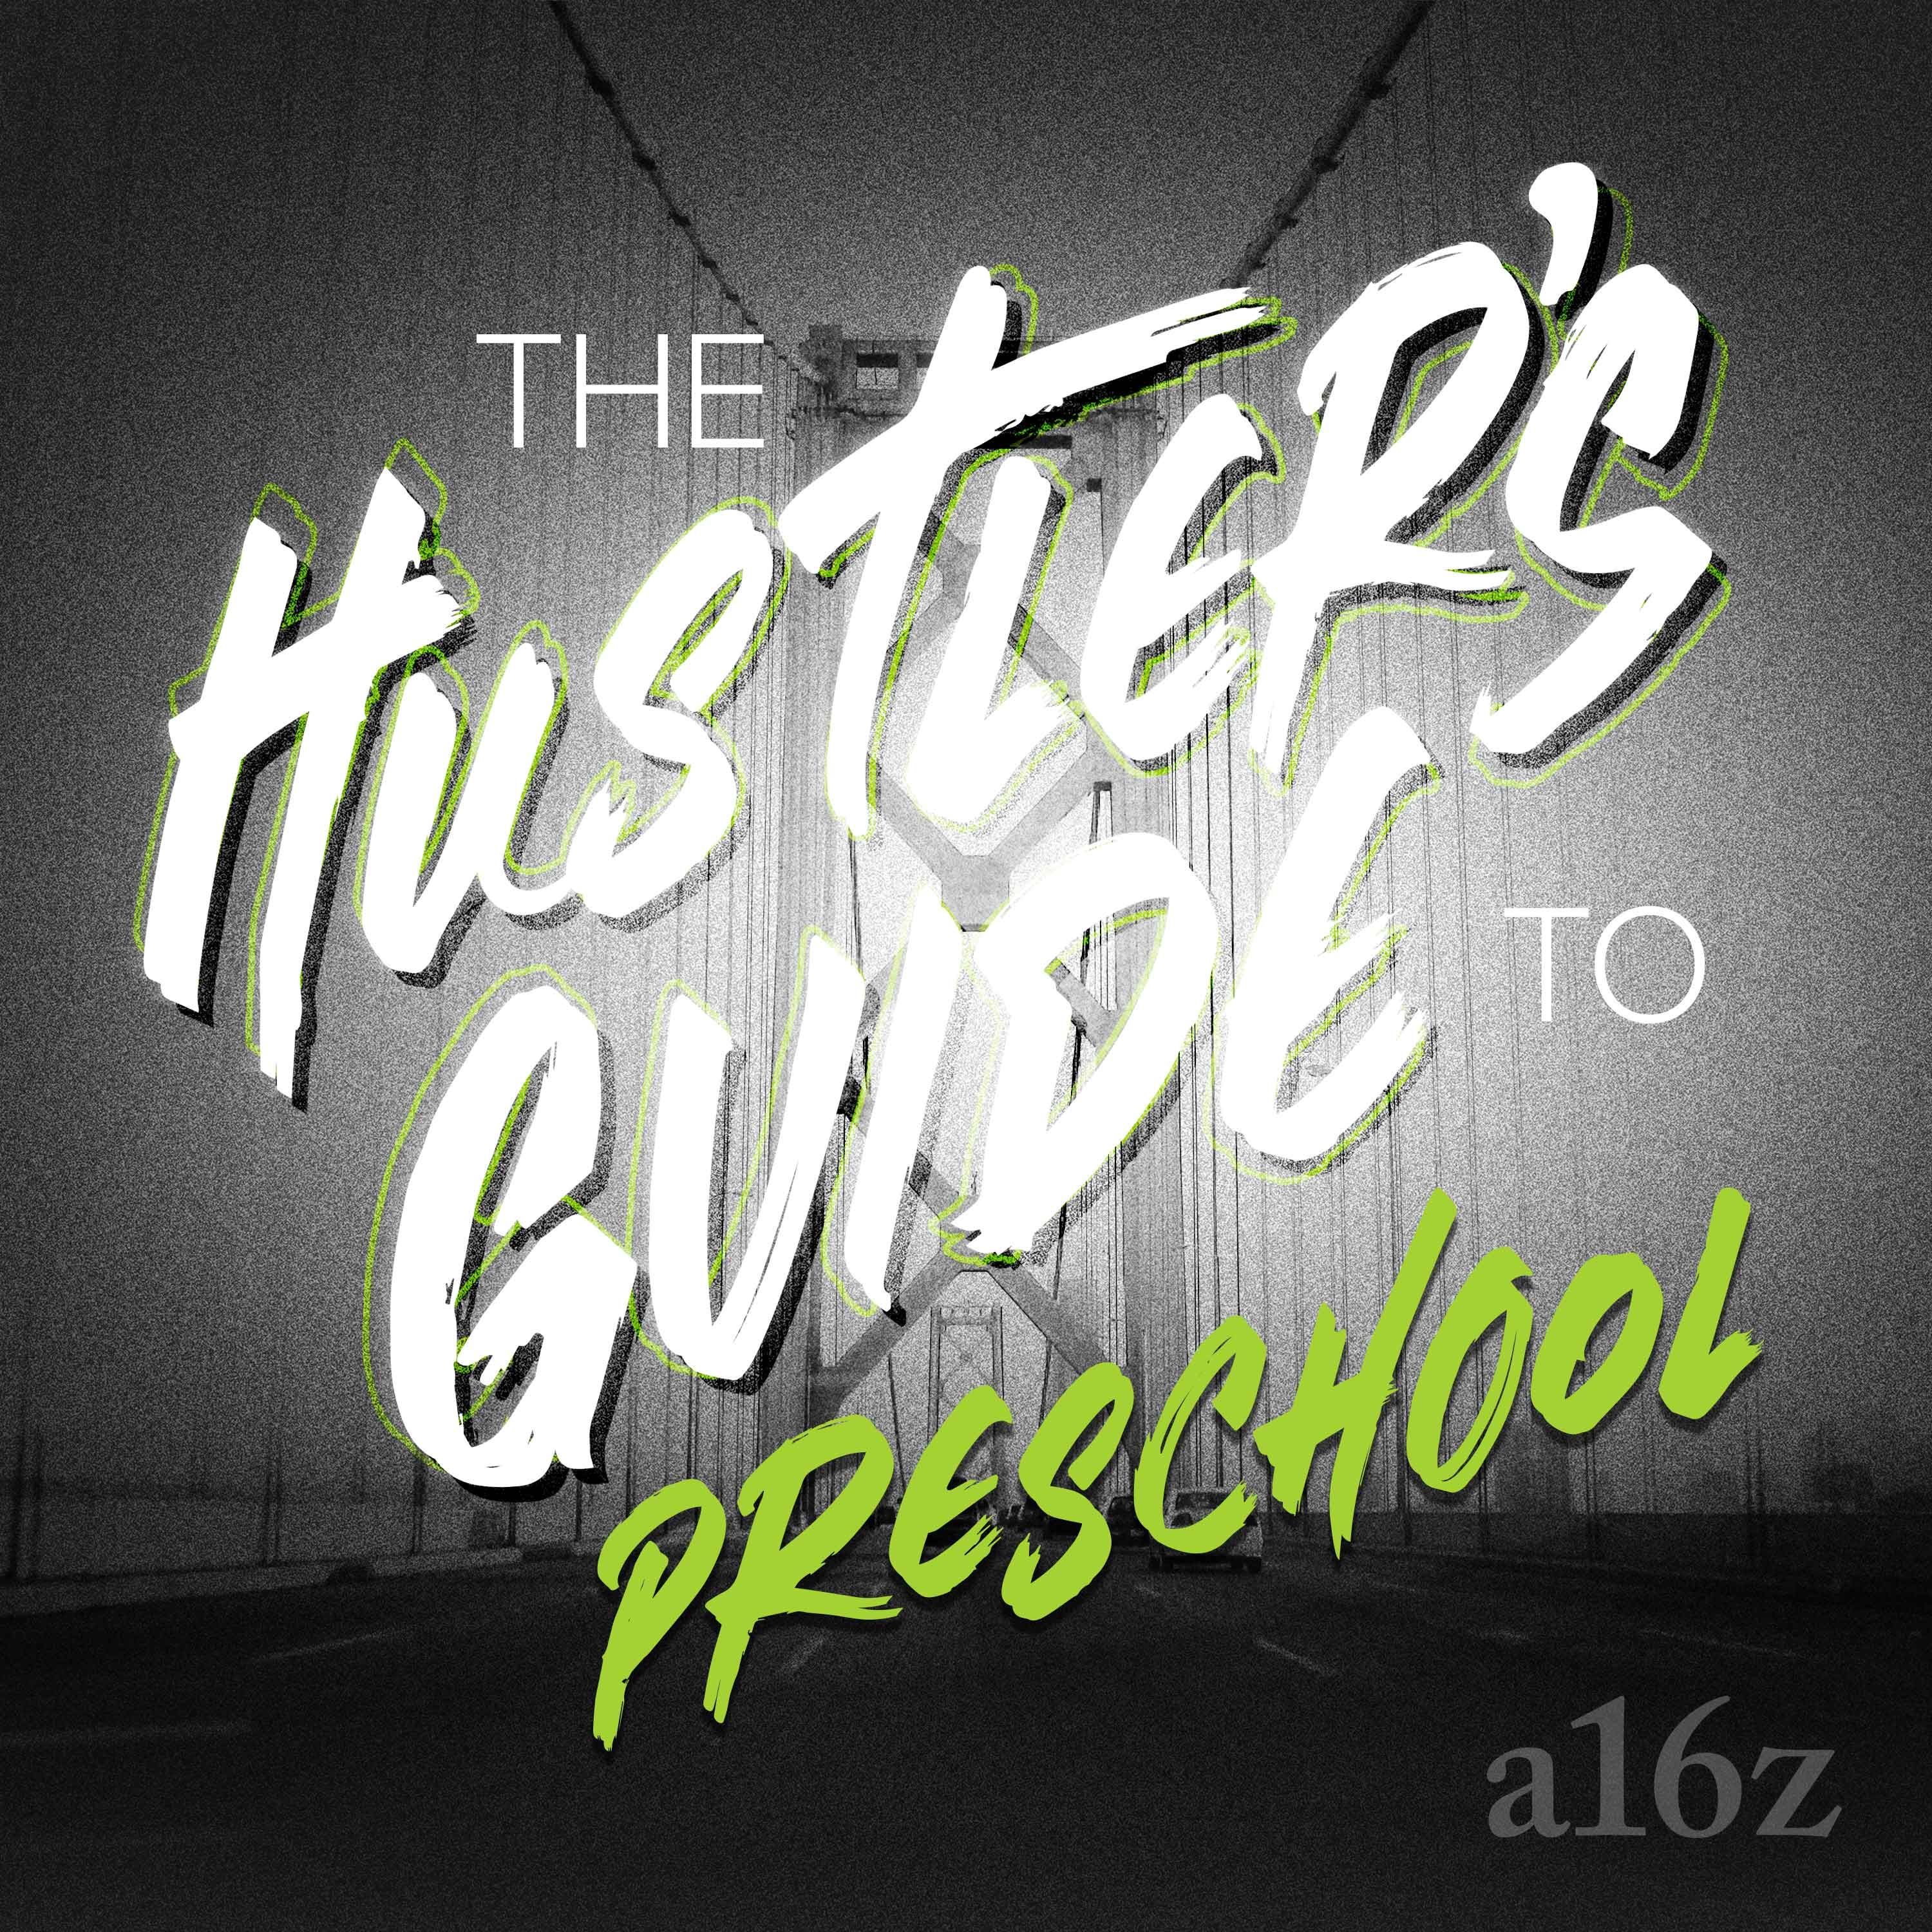 The Hustler's Guide to Preschool